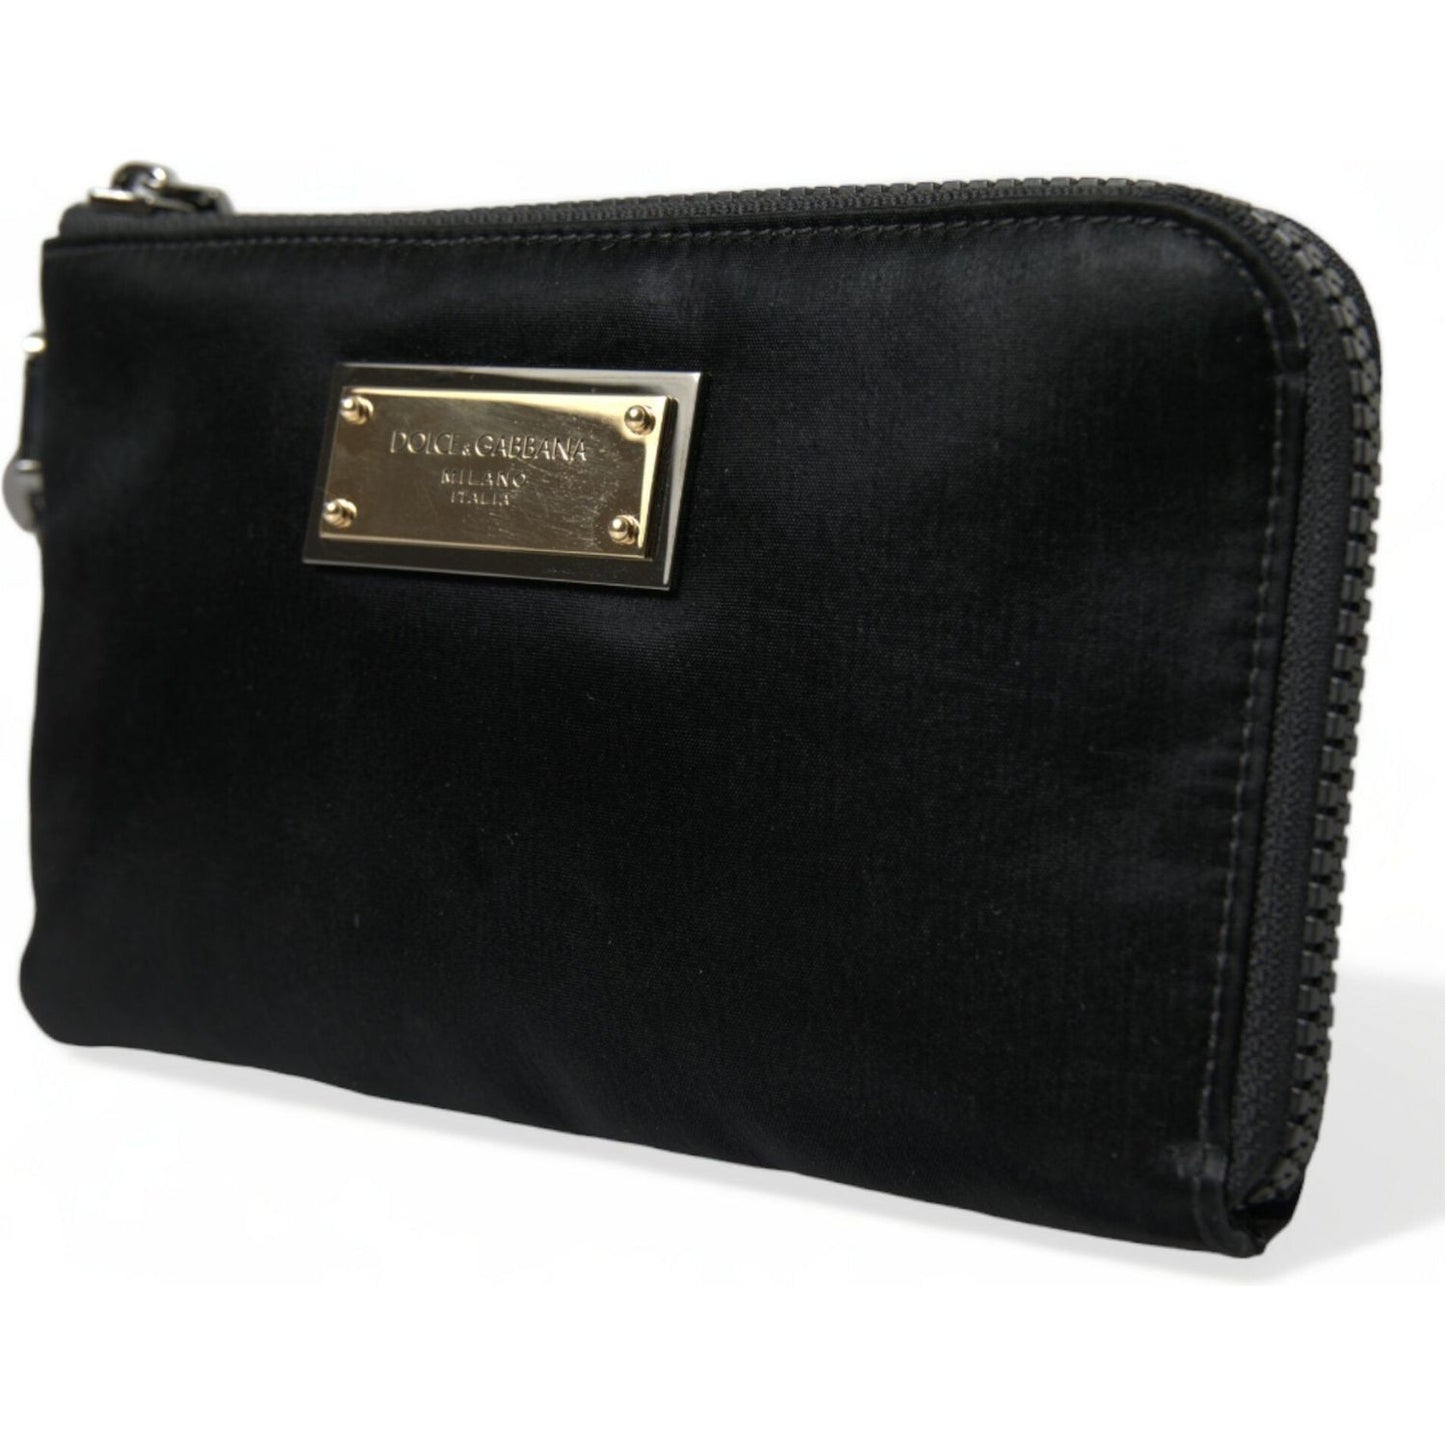 Dolce & GabbanaElegant Black Nylon Leather Pouch with Silver DetailsMcRichard Designer Brands£499.00